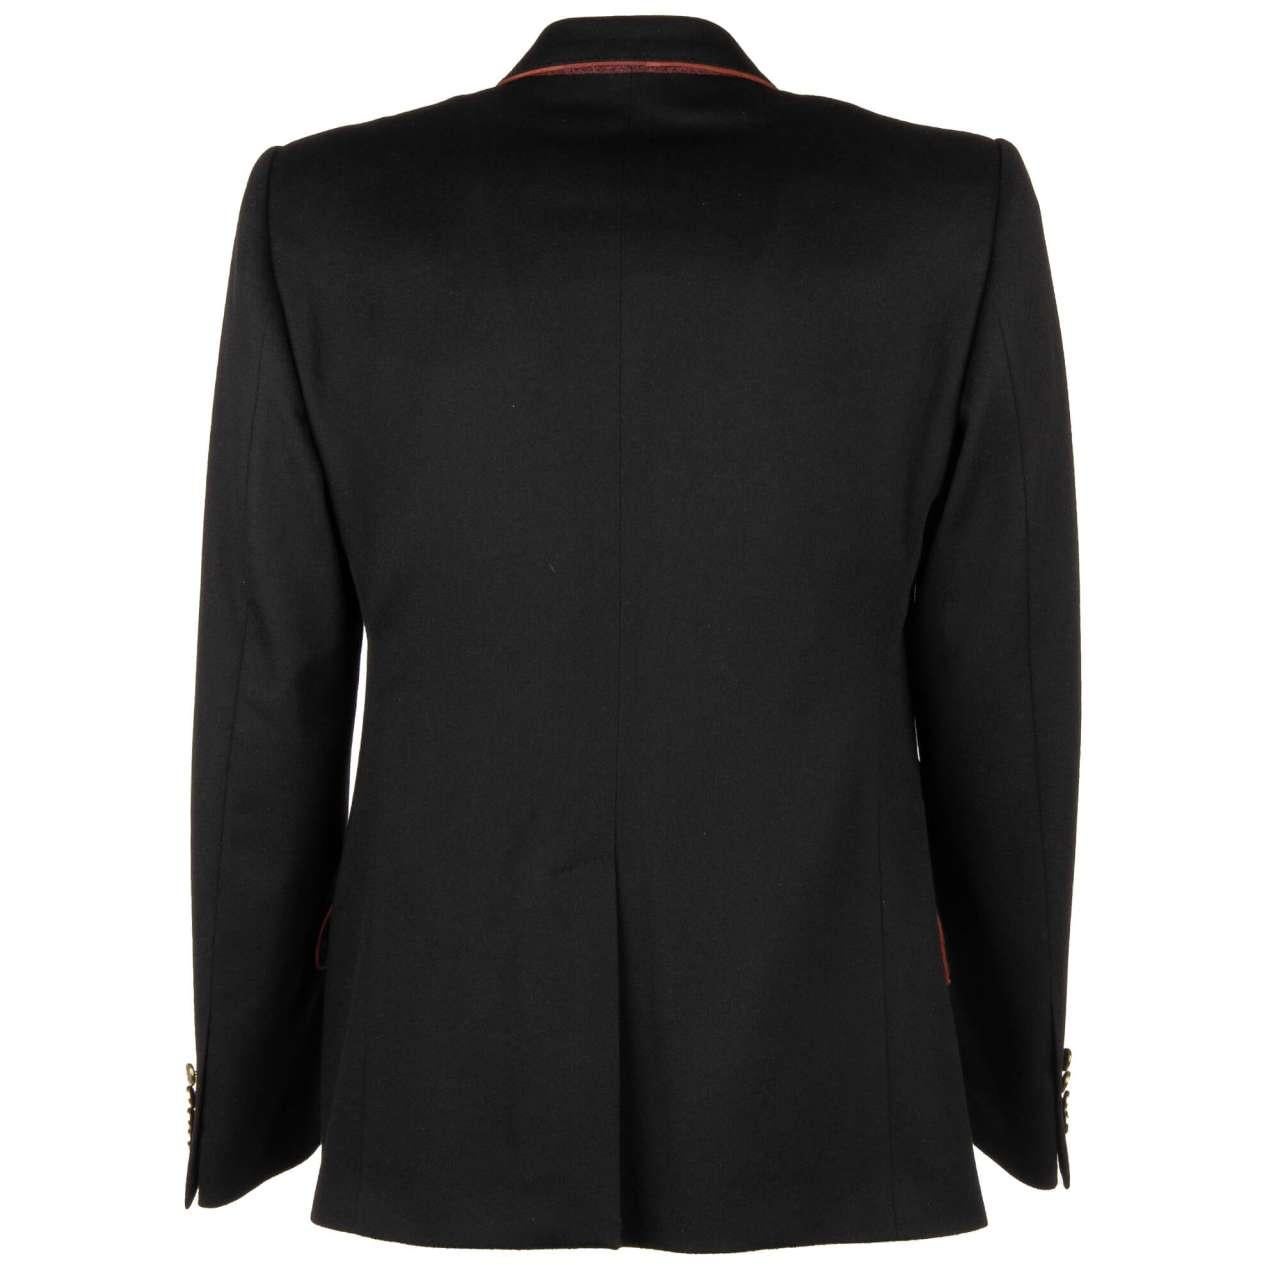 D&G Cashmere Jacket Vest Ensemble SICILIA with Embroidered Logo Crown Black 54 In Excellent Condition For Sale In Erkrath, DE